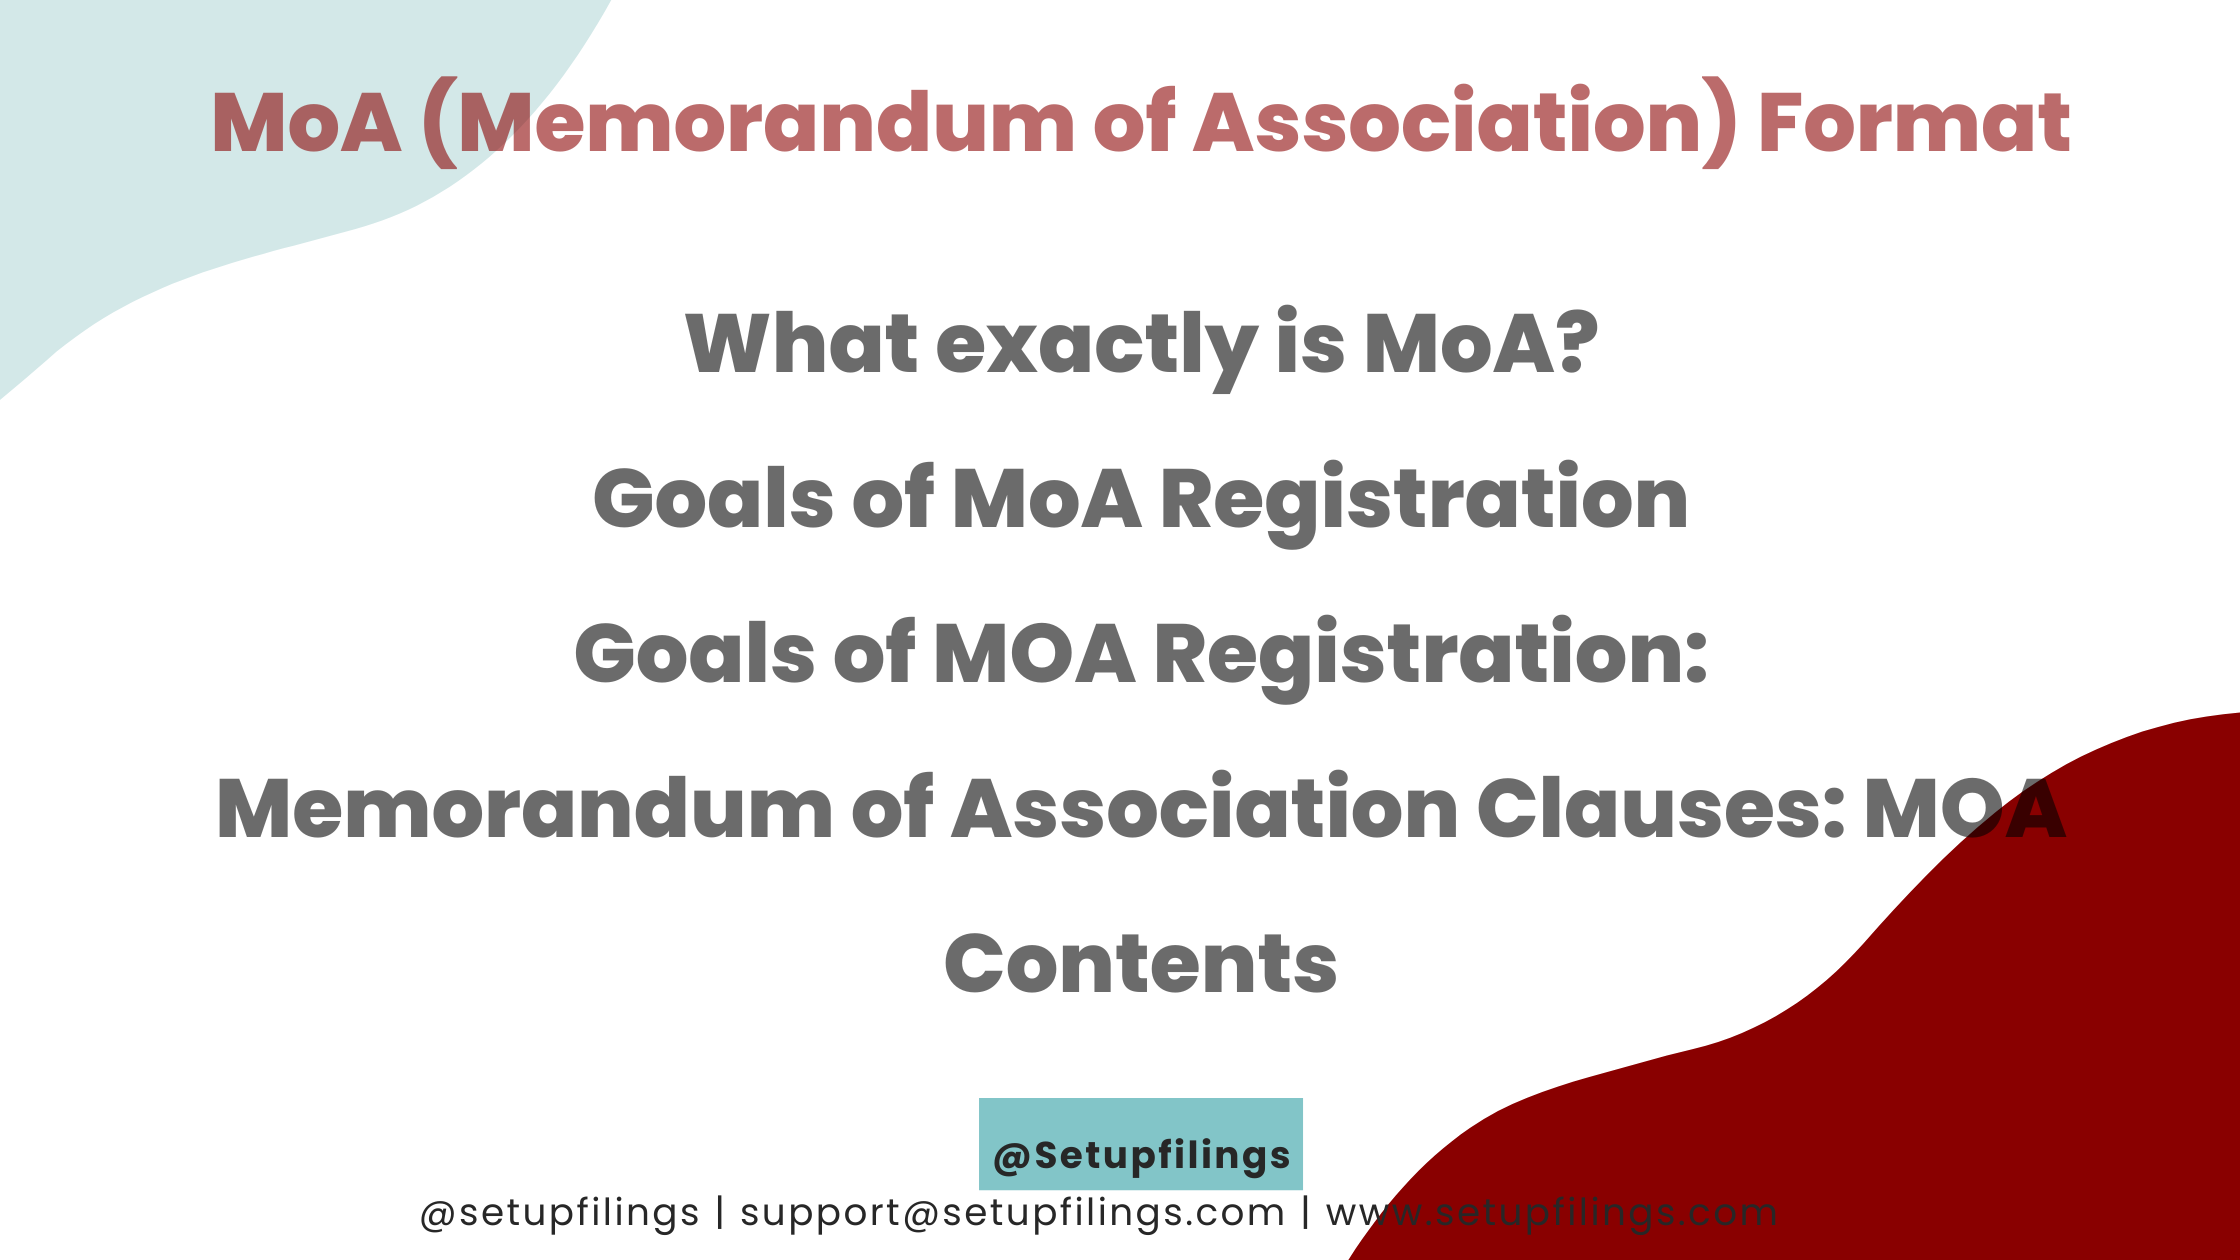 MoA-Memorandum-of-Association-Format